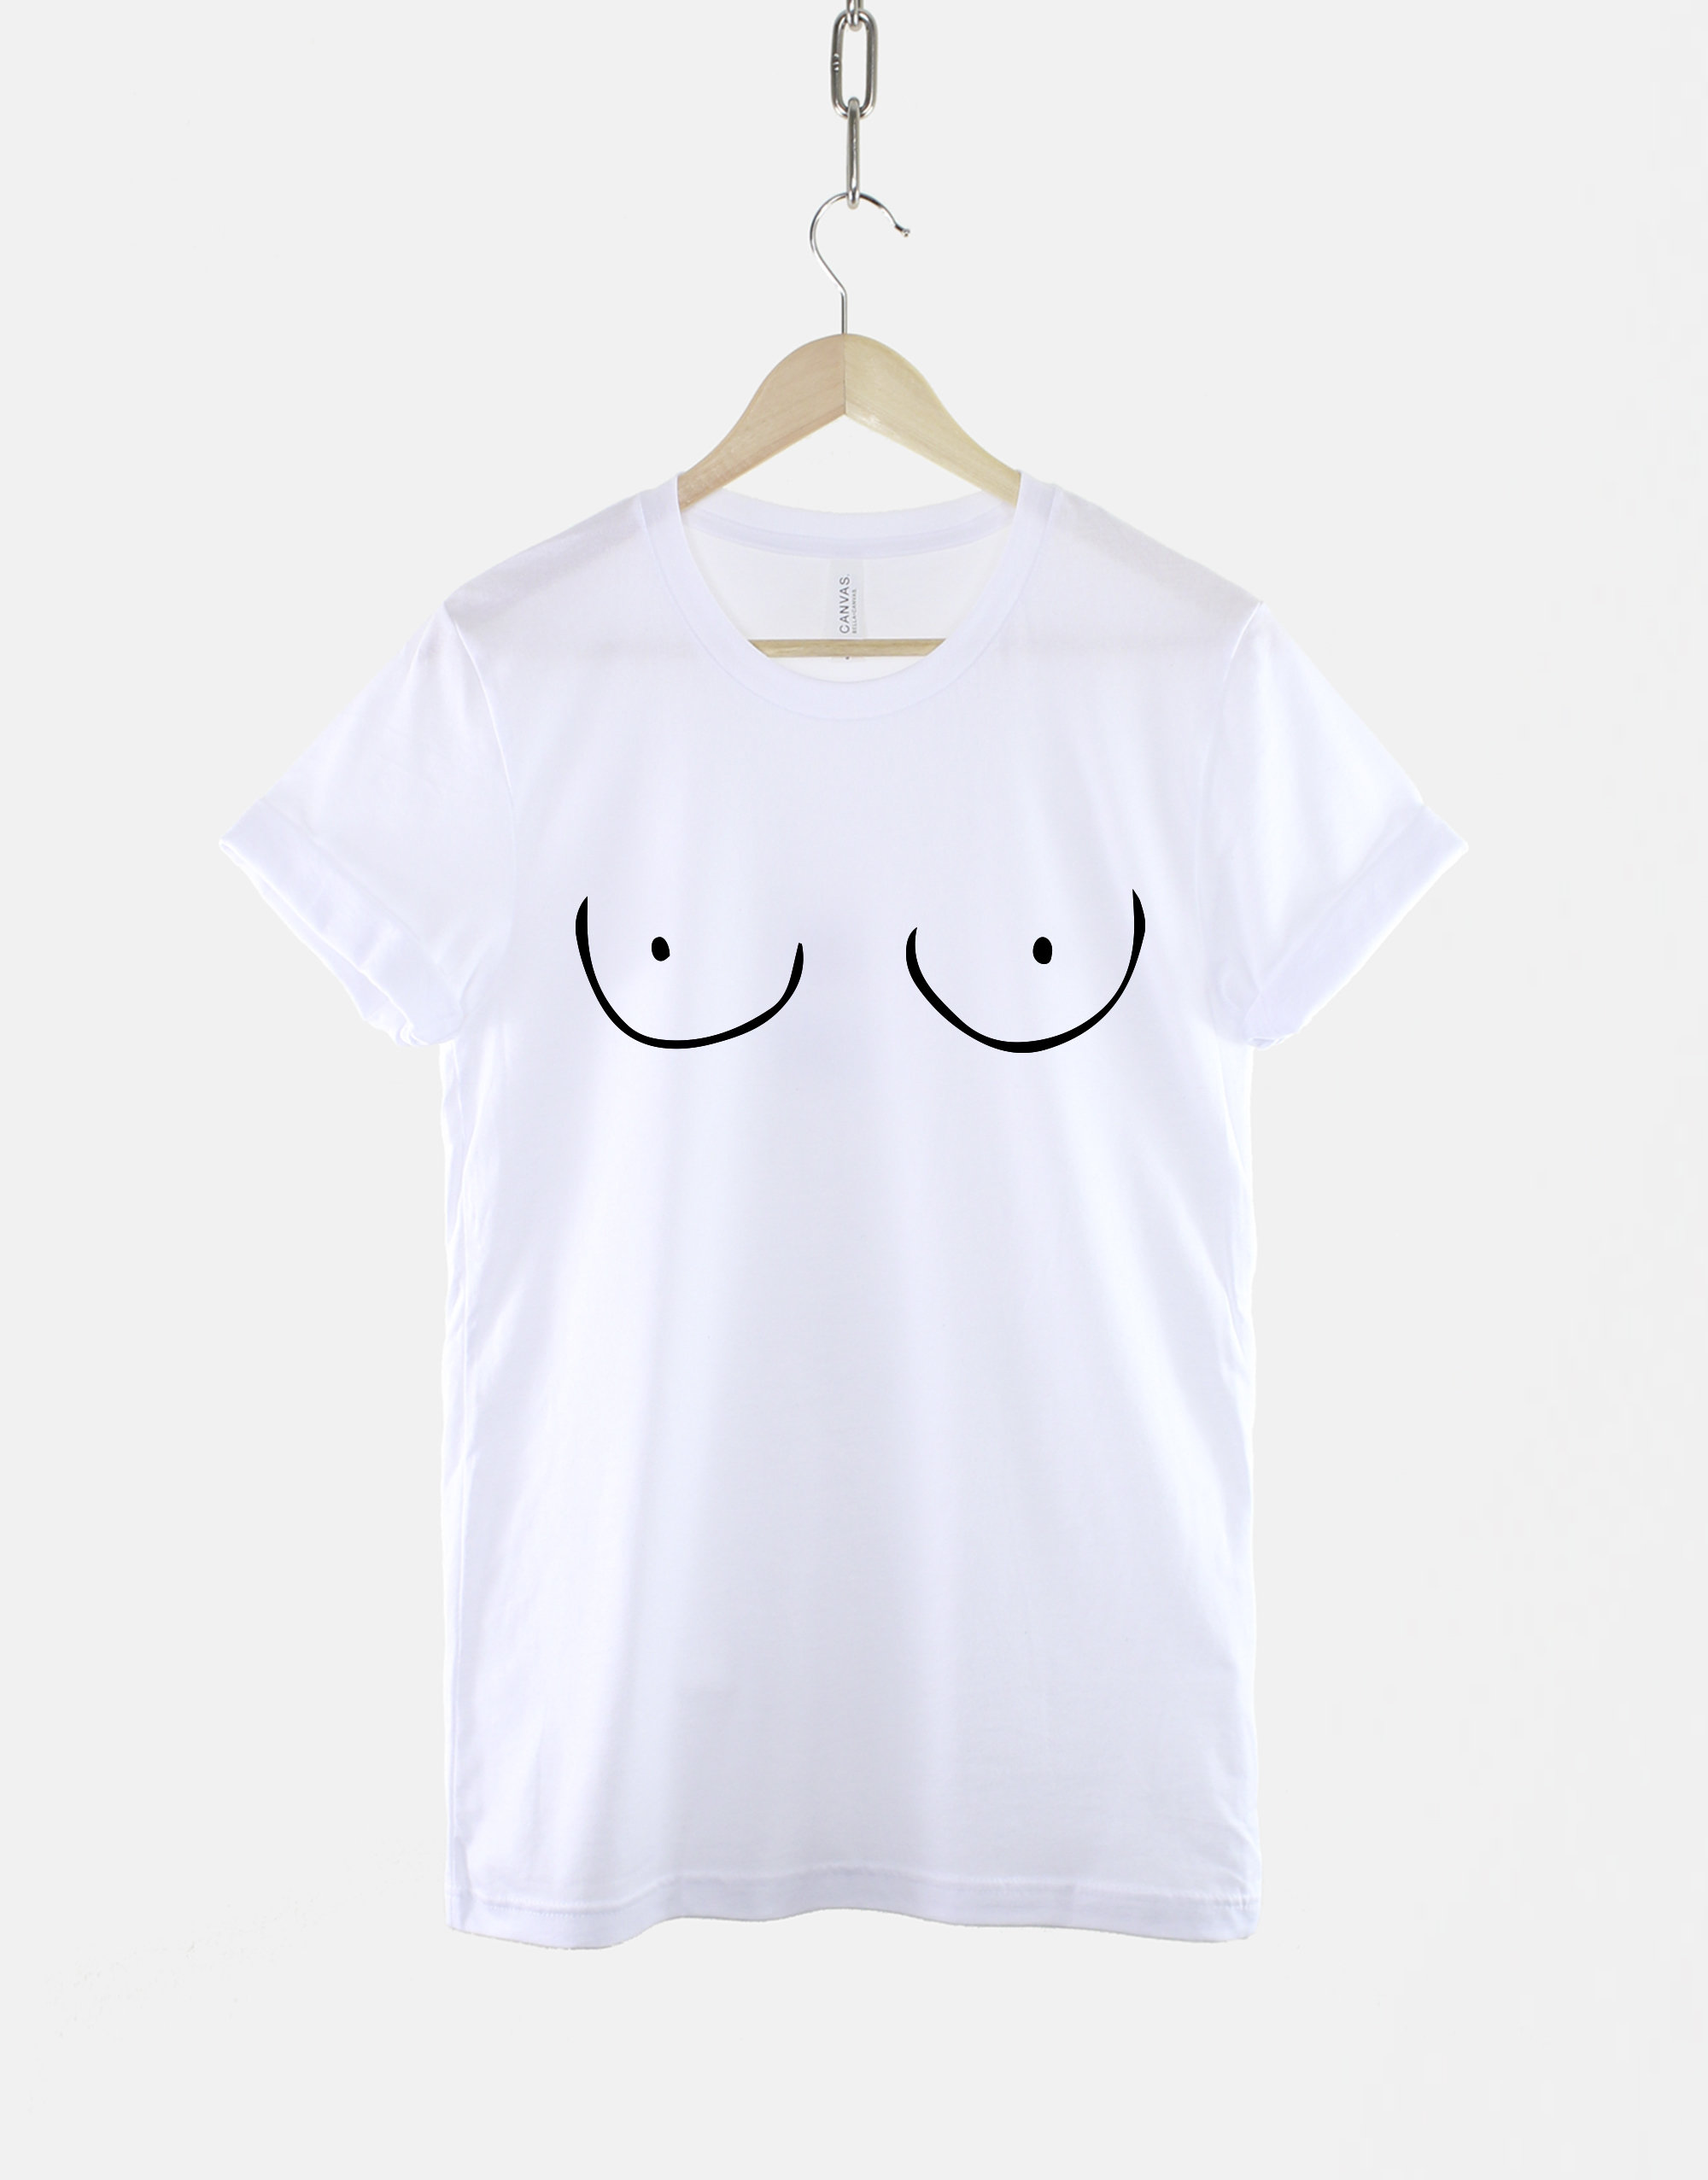  Funny t Shirts - Titties Shirt - Boobs Shirt - Sexy Women  Shirts - Titties - Gift for her (XL) White : Clothing, Shoes & Jewelry